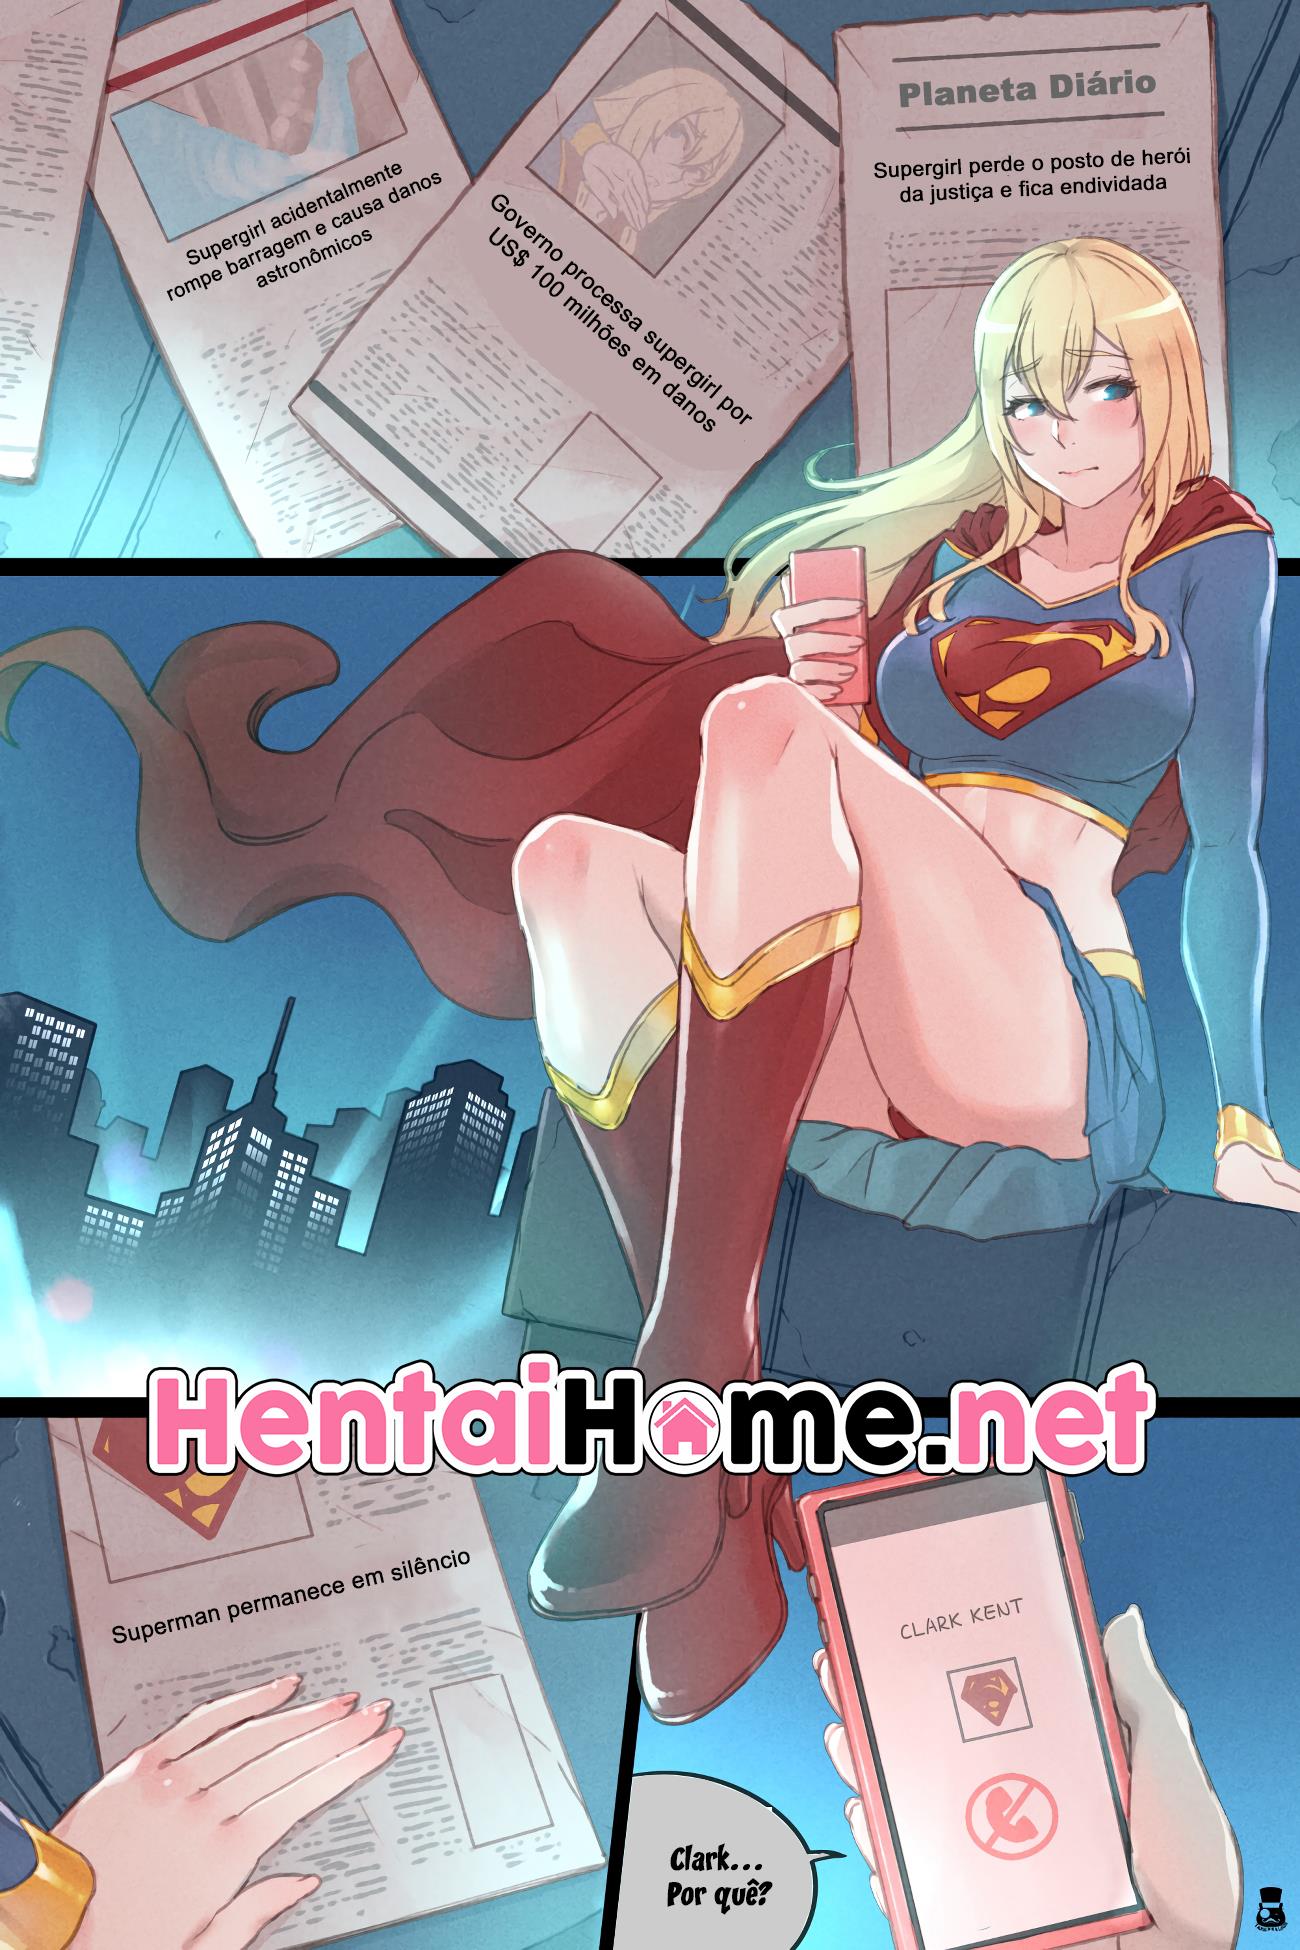 Supergirl transando - Foto 2